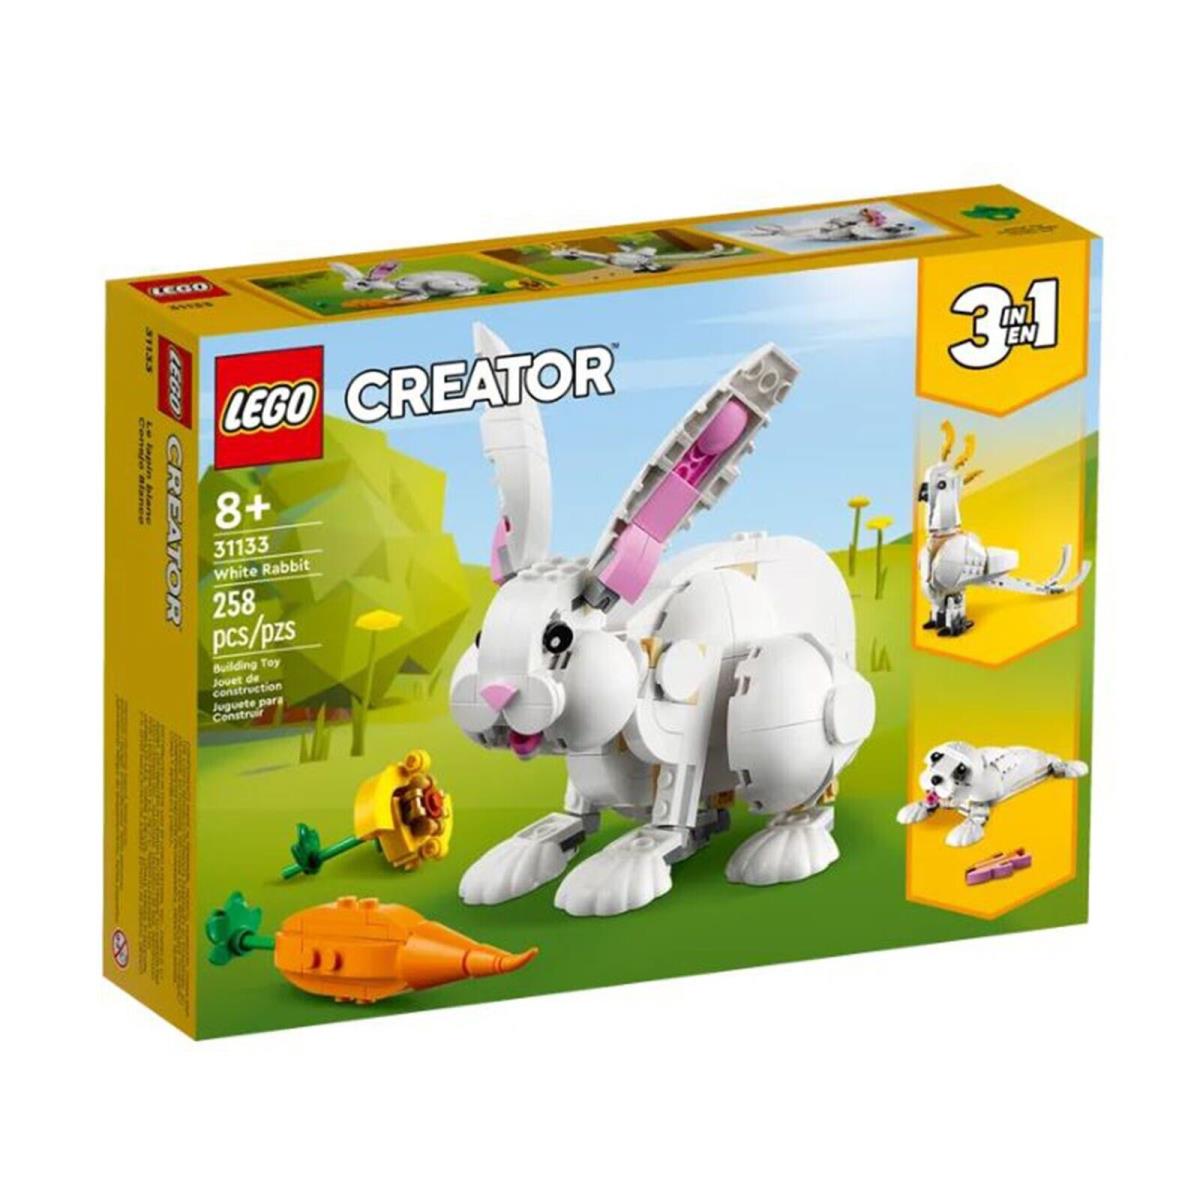 Lego Creator White Rabbit Building Set 31133 IN Stock - White